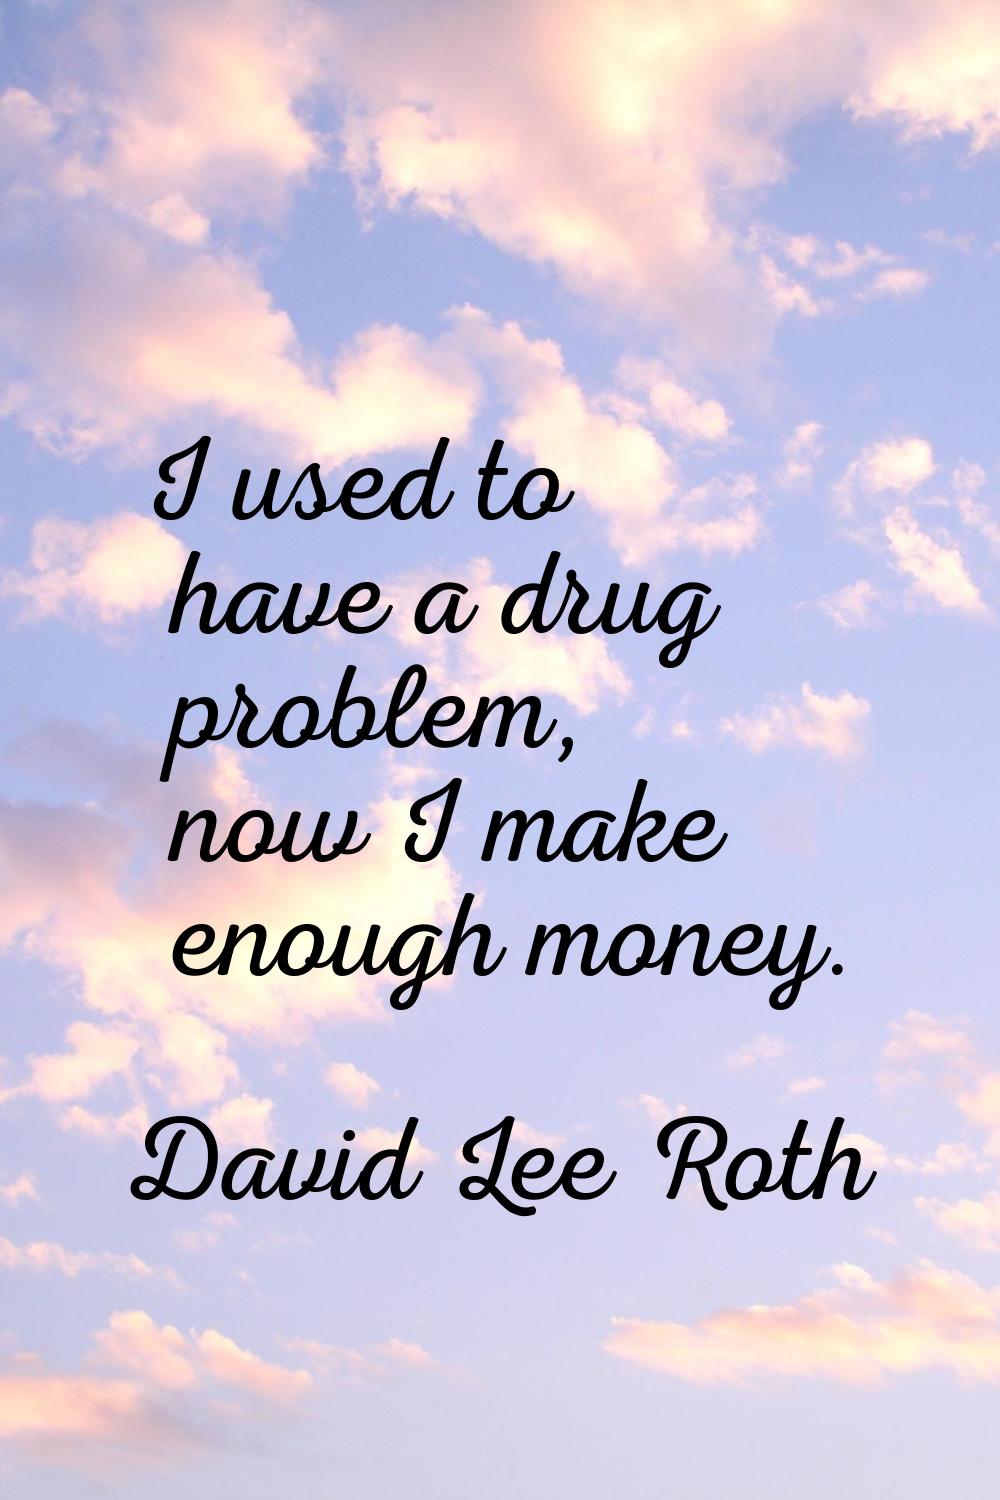 I used to have a drug problem, now I make enough money.